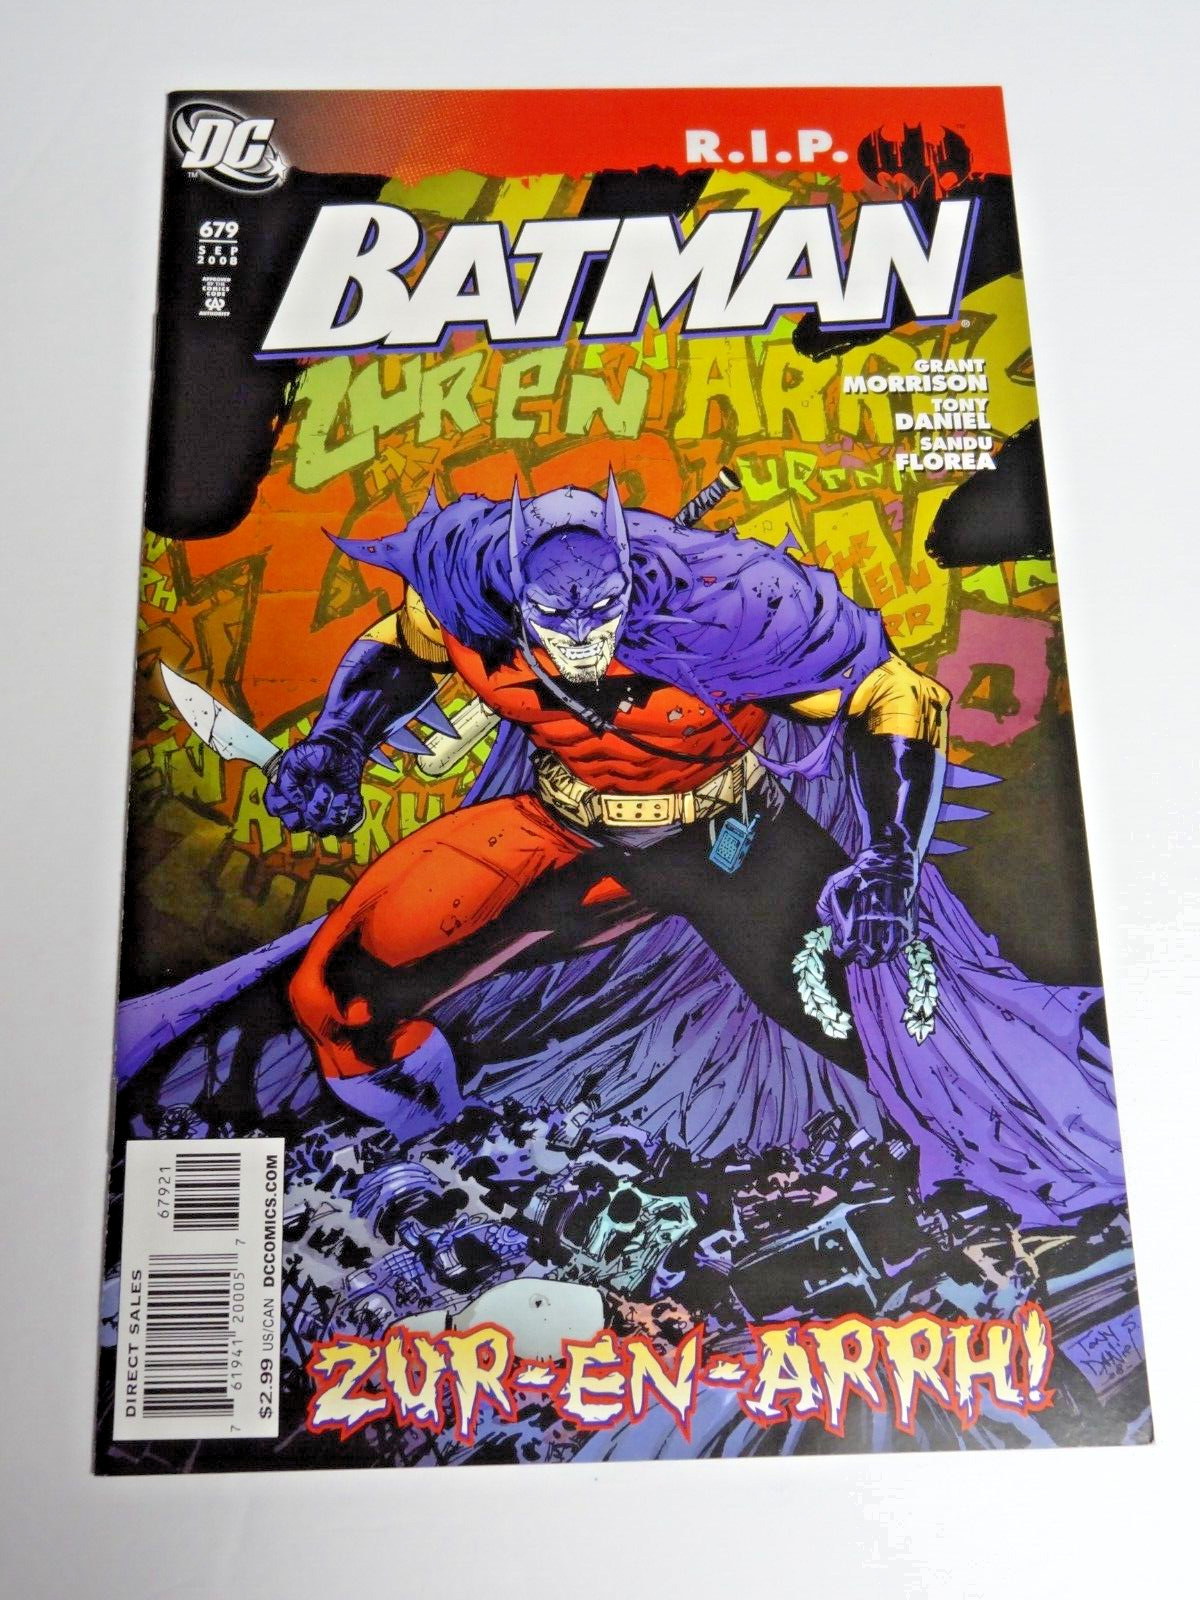 DC Comics Batman #679 Variant Cover 1:25 Zur-En-Arrh